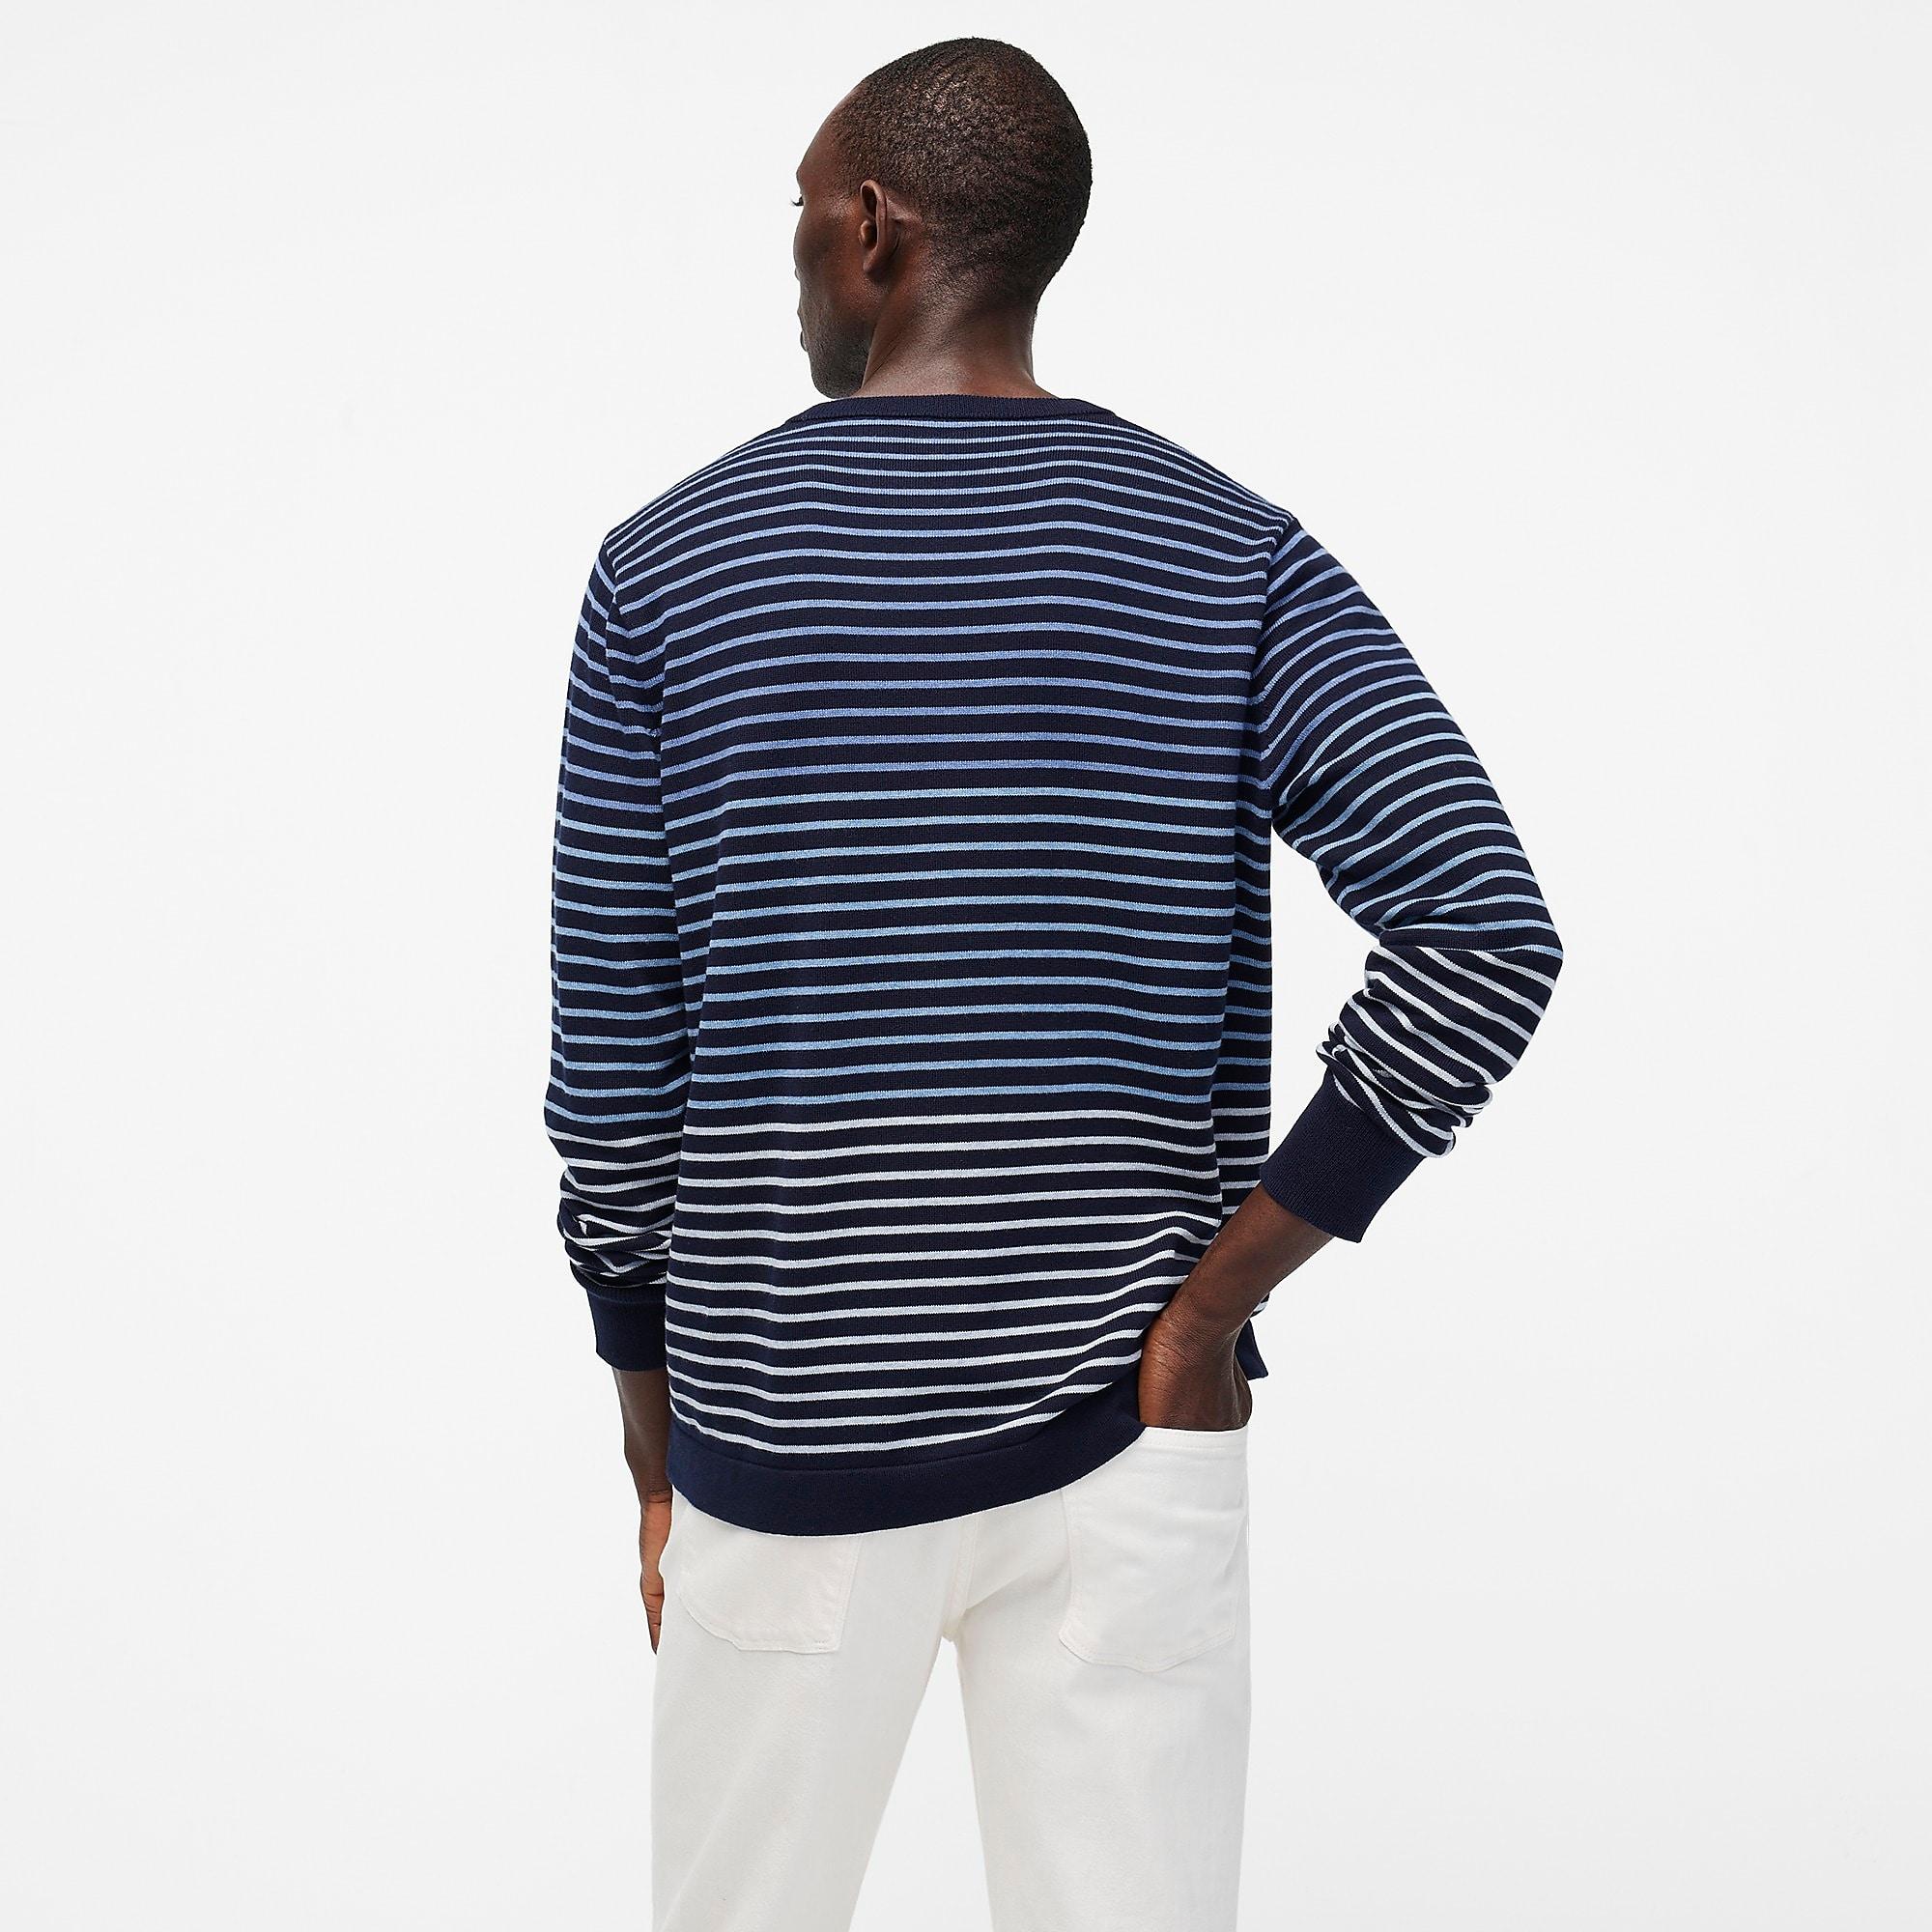 J.Crew Cotton Crewneck Sweater In Gradient Stripe in Blue for Men - Lyst